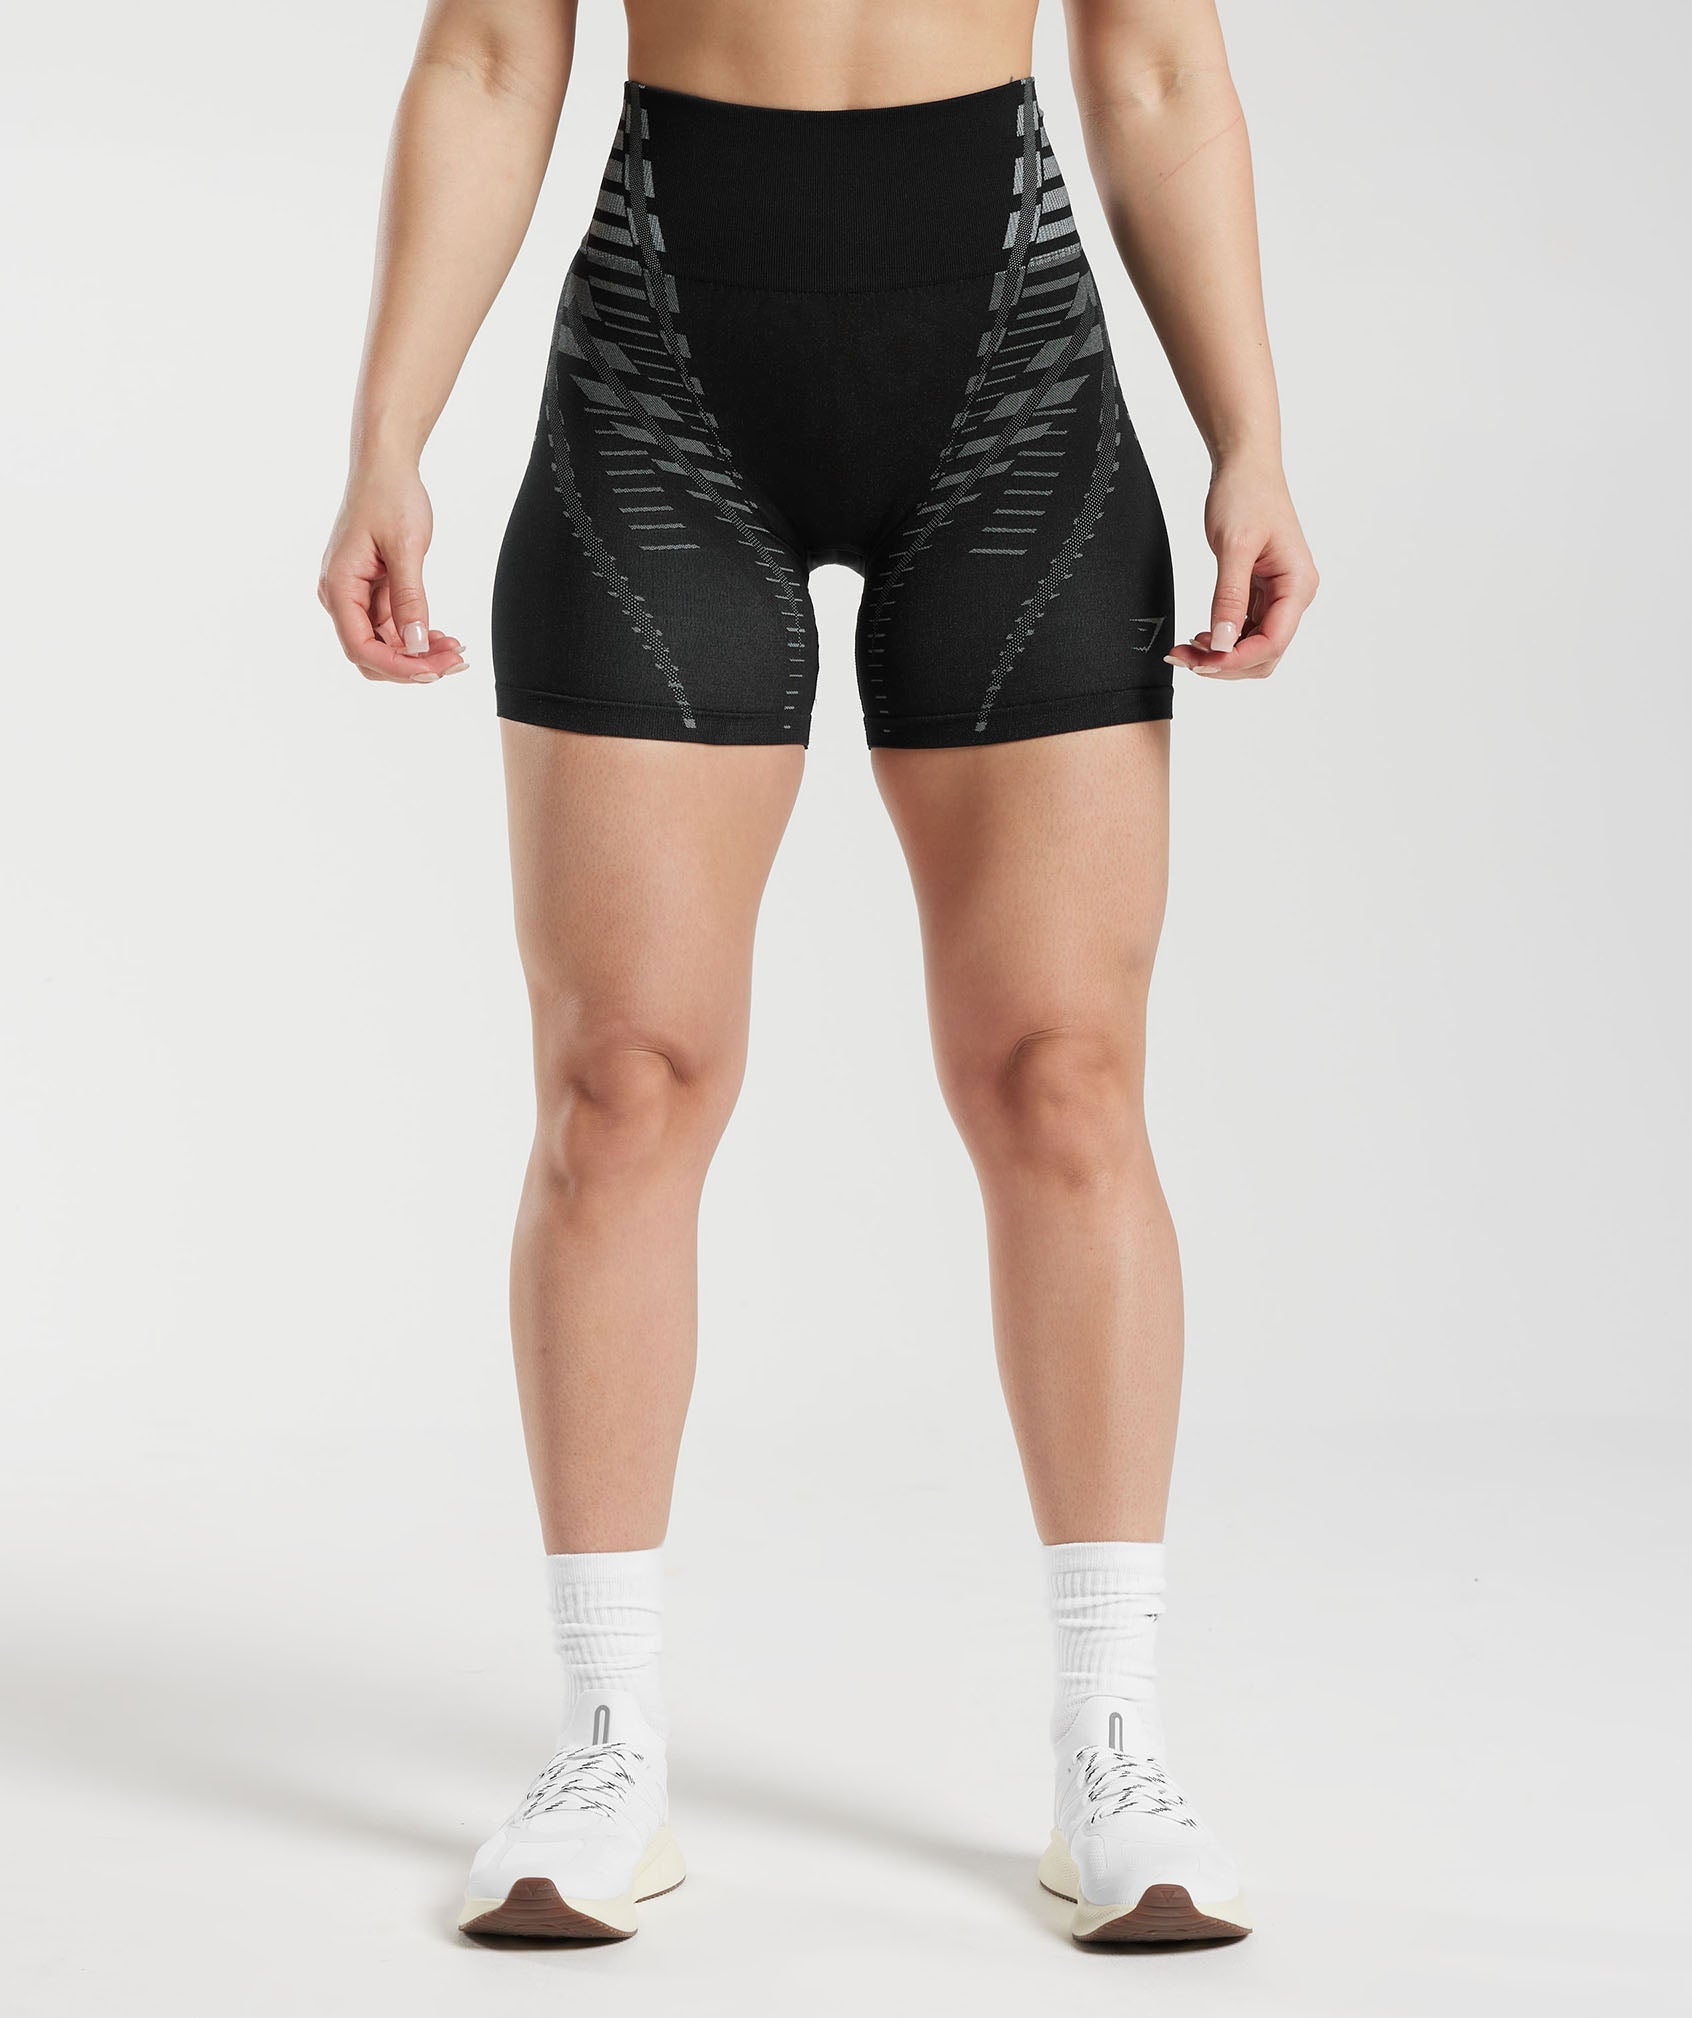 Gymshark Apex Limit Shorts - Black/Light Grey